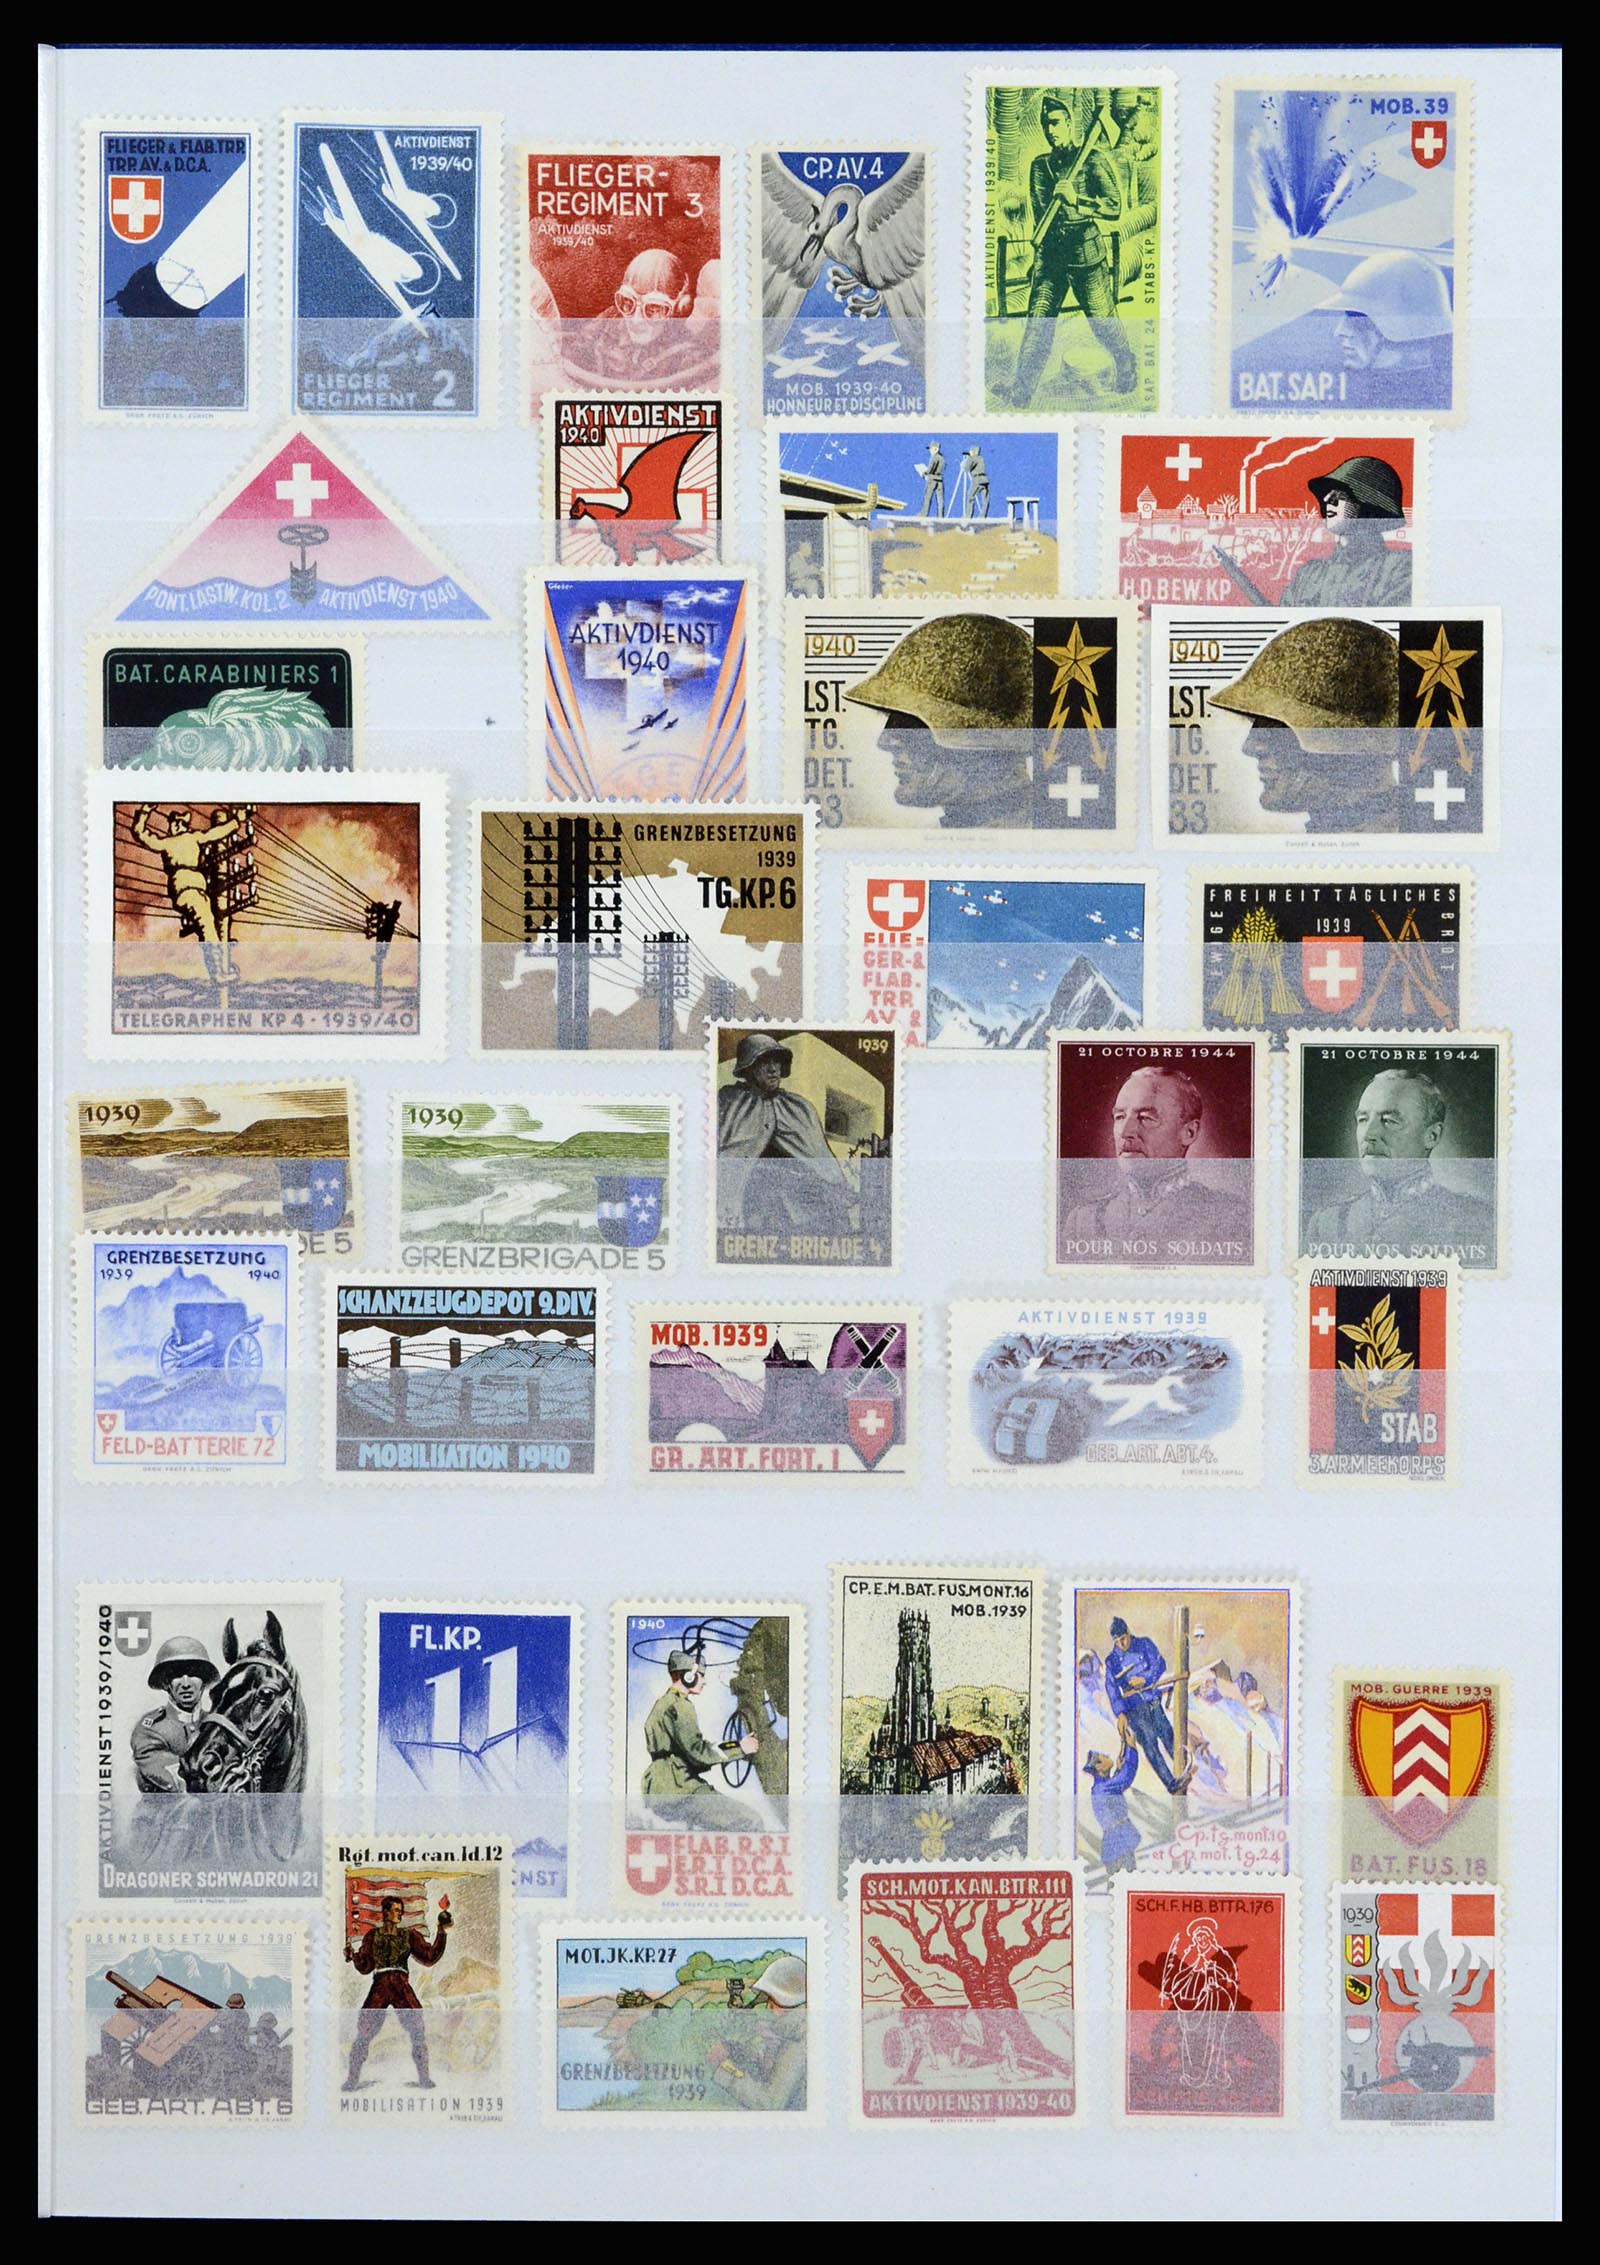 37149 011 - Stamp collection 37149 Switzerland soldier stamps 1914-1945.